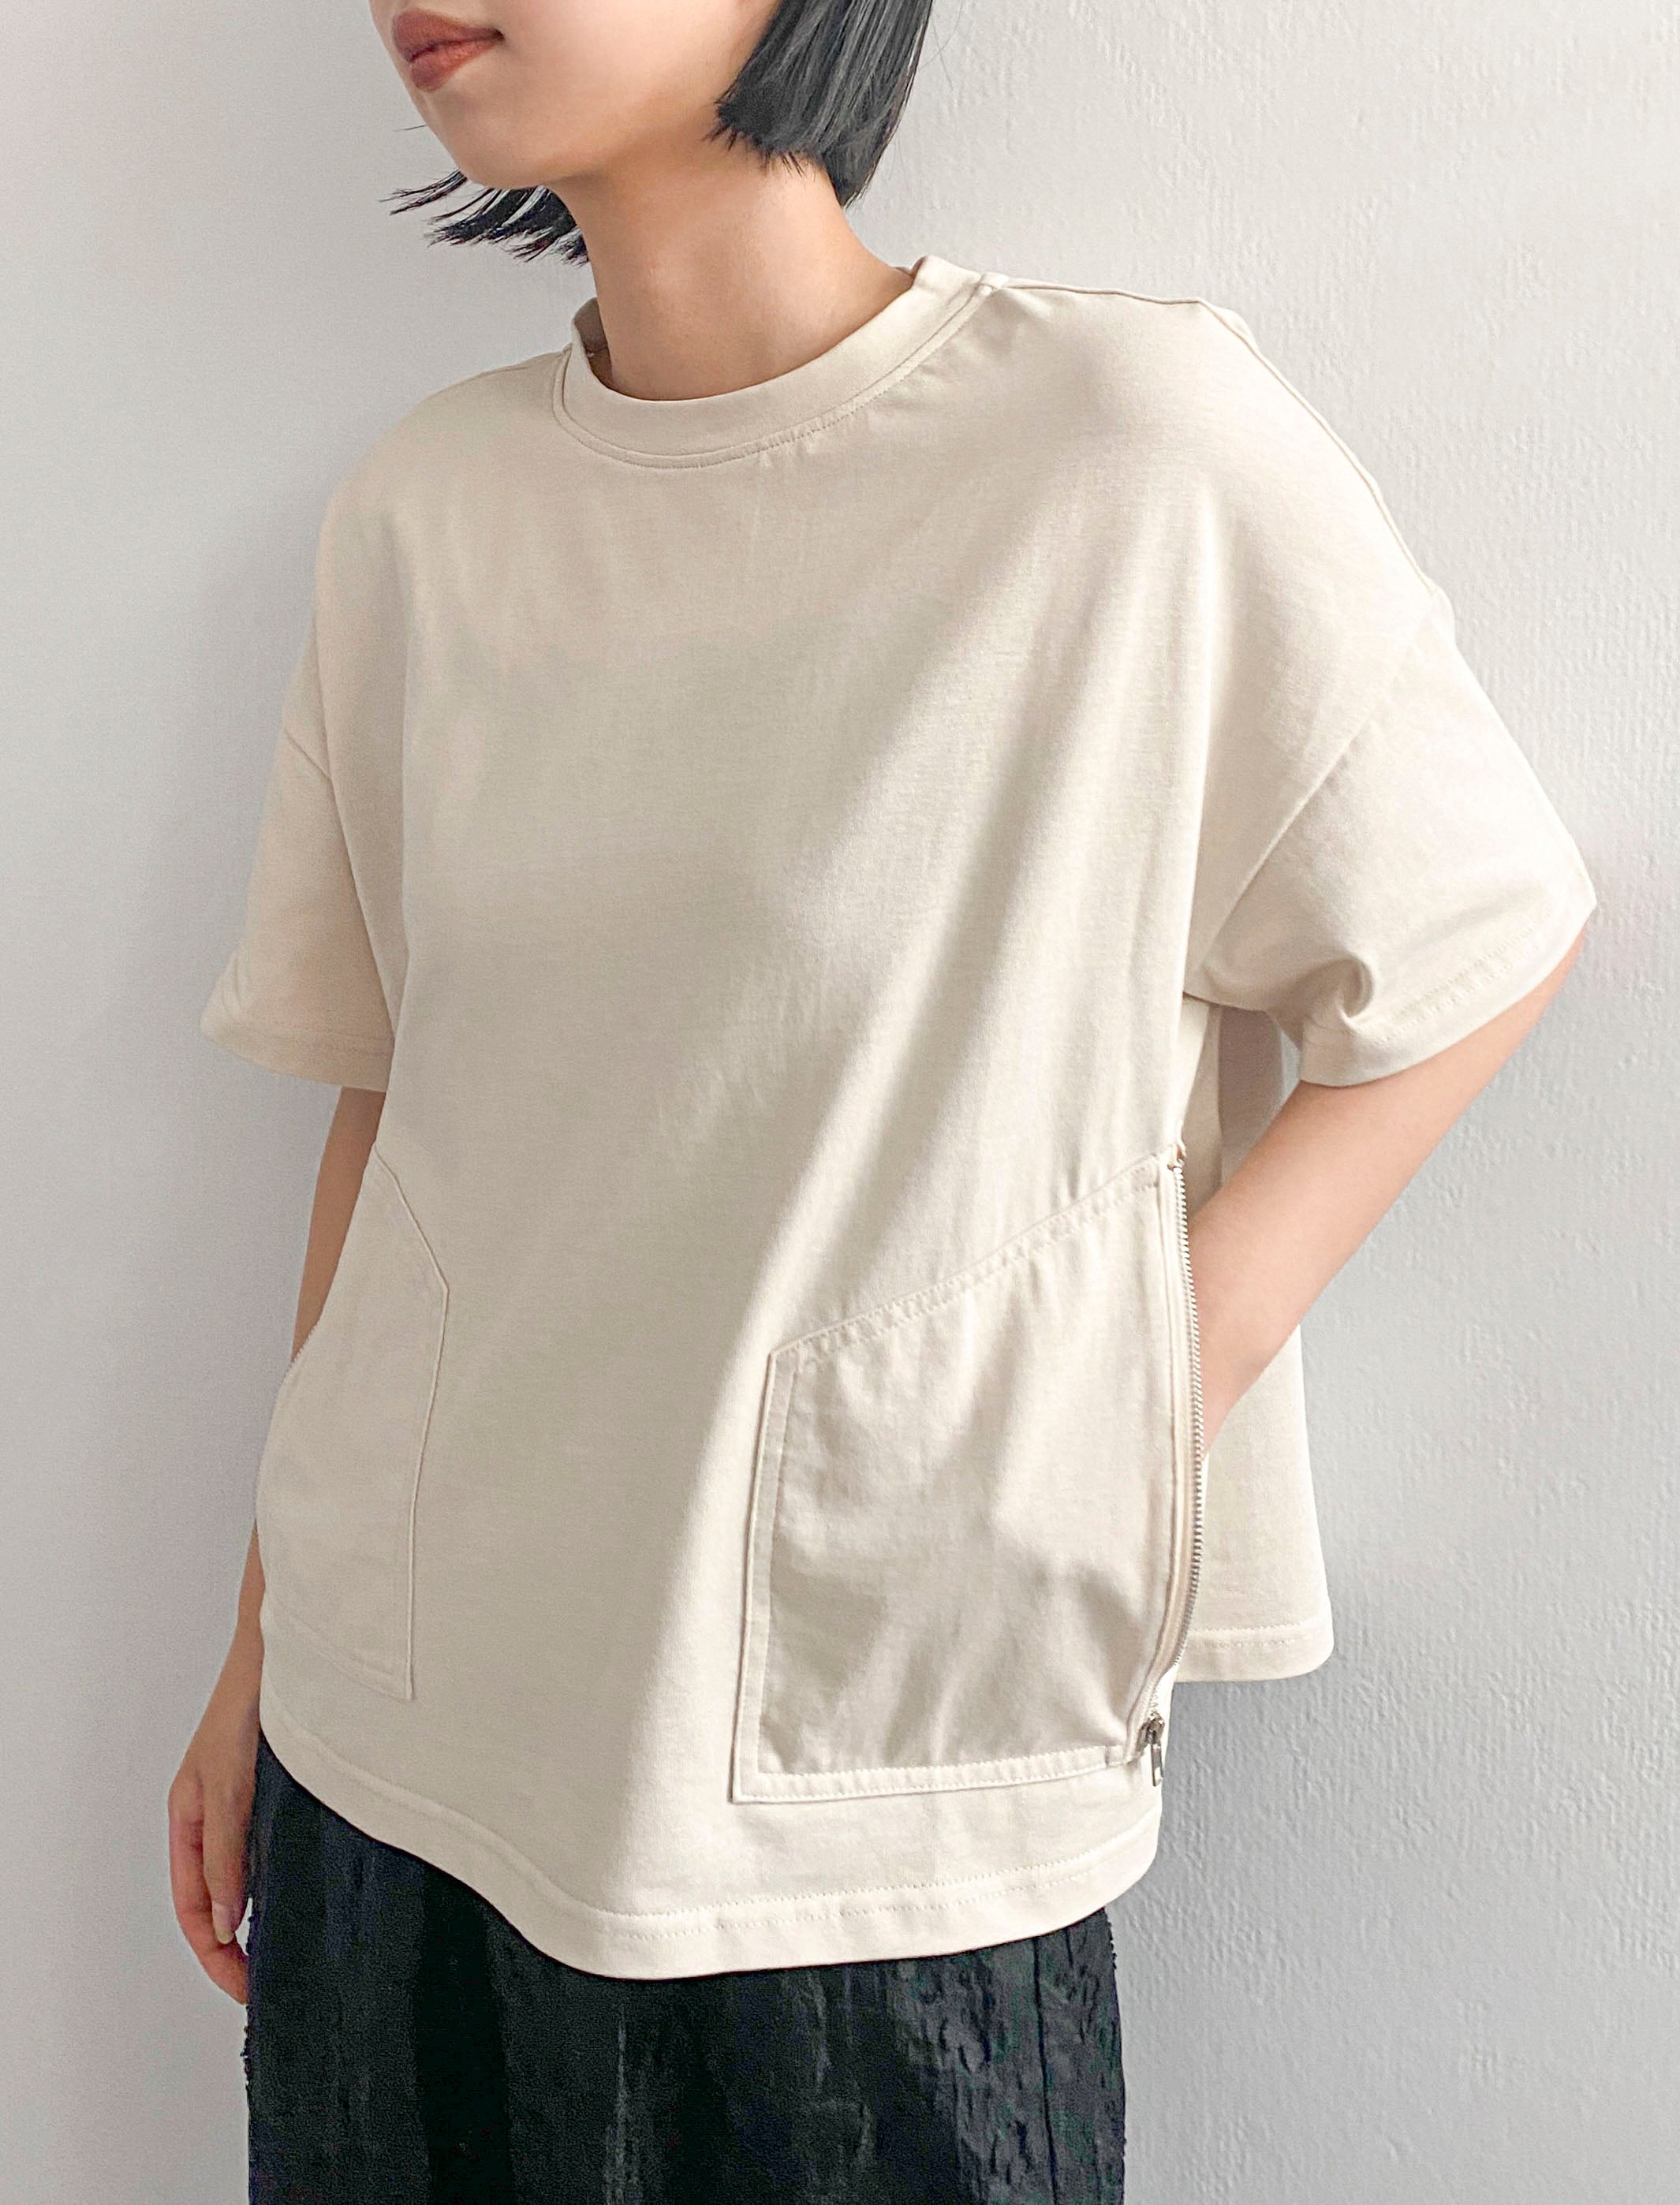 ZIP Pocket T-Shirt / OFFWHITE / 158cm